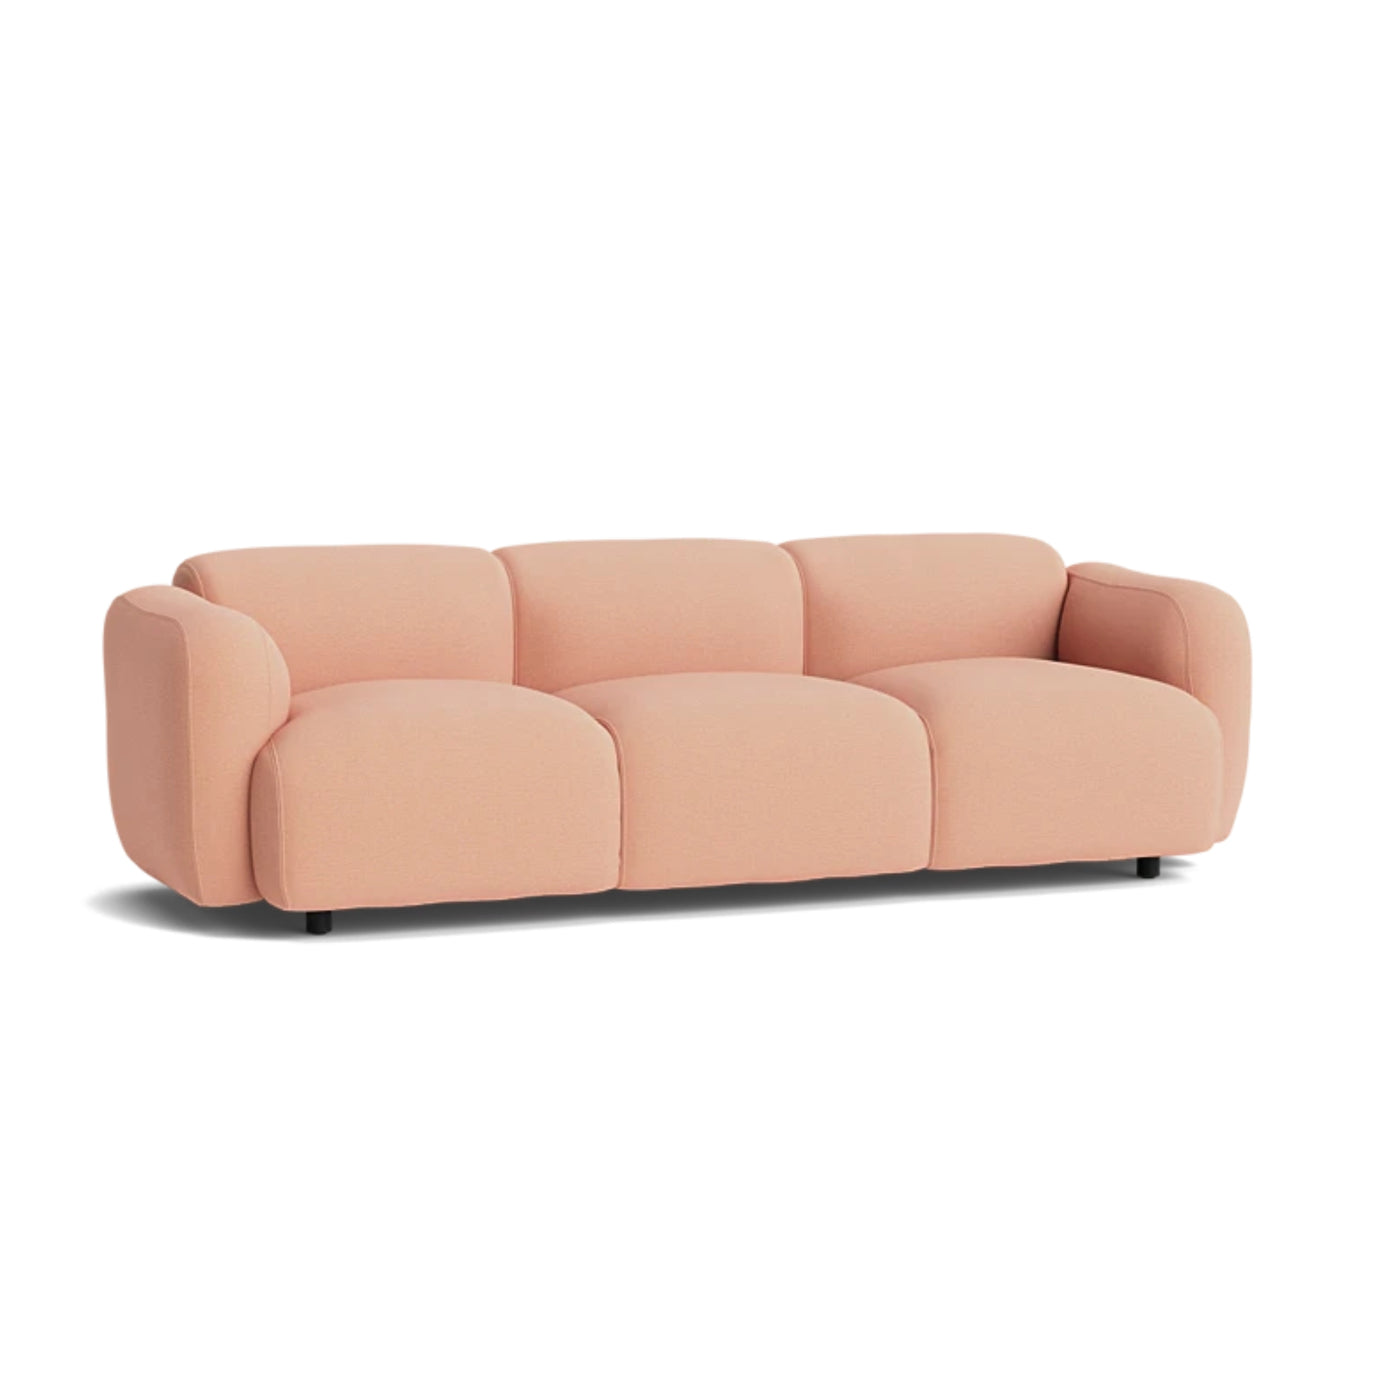 Normann Copenhagen Swell 3 Seater Sofa at someday designs. #colour_steelcut-trio-515